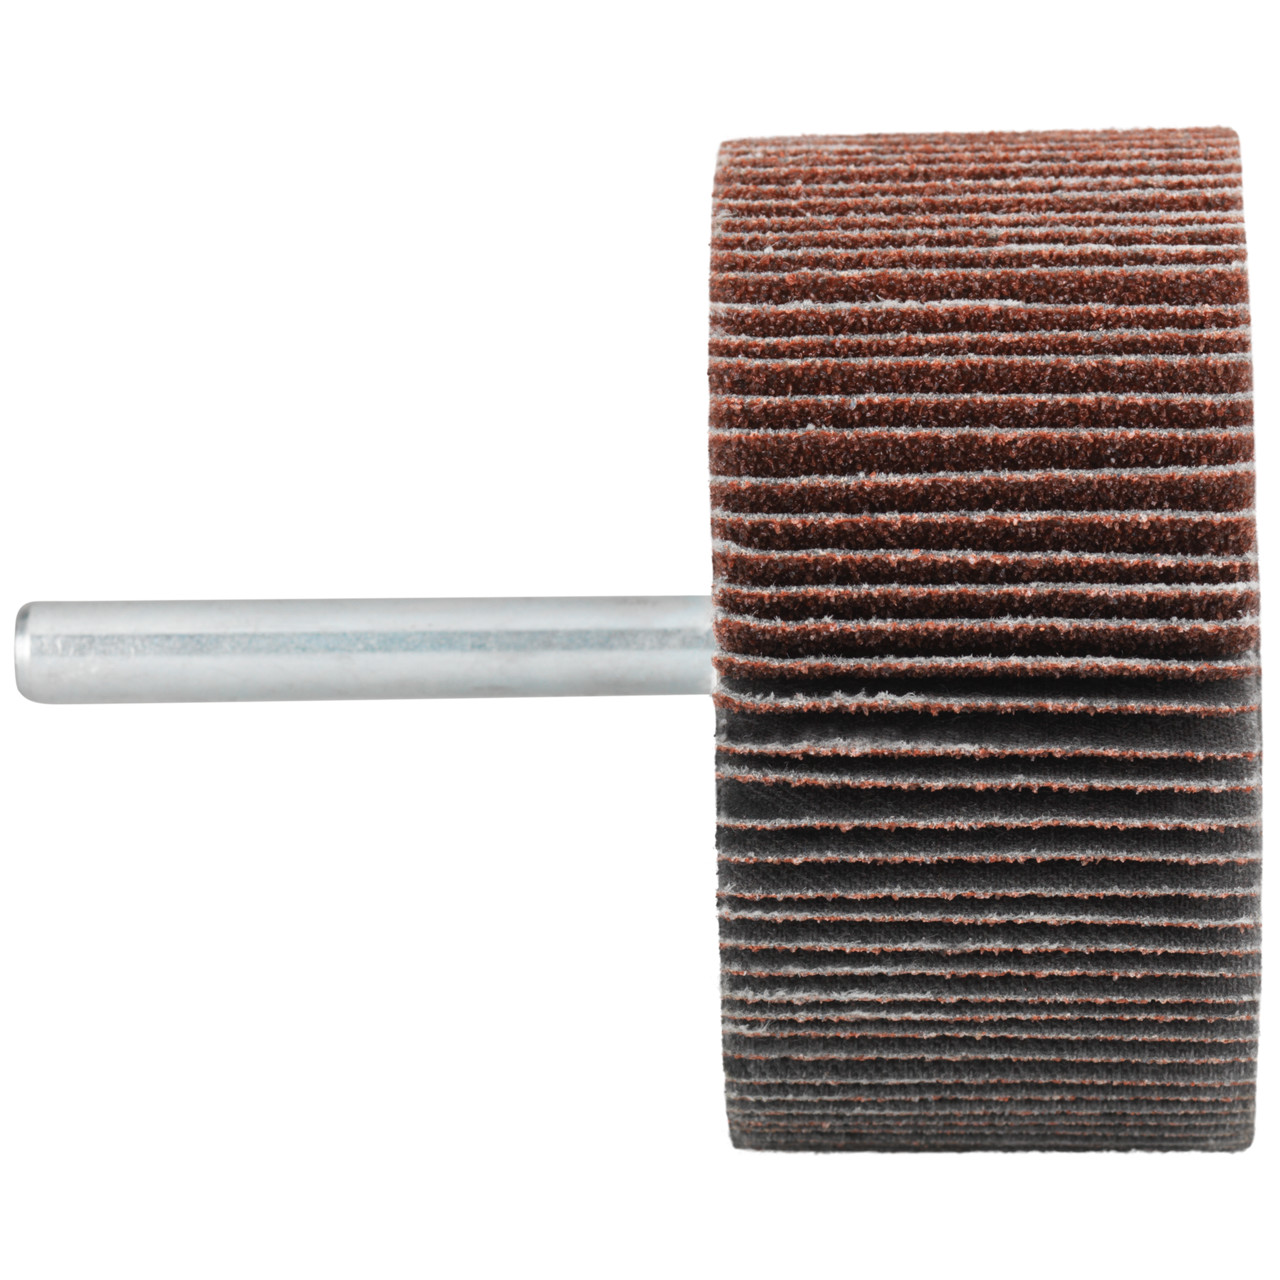 Tyrolit A-P01 C X Perni DxD 60x30 Per acciaio, acciaio inox e metalli non ferrosi, P40, forma: 52LA, Art. 817011